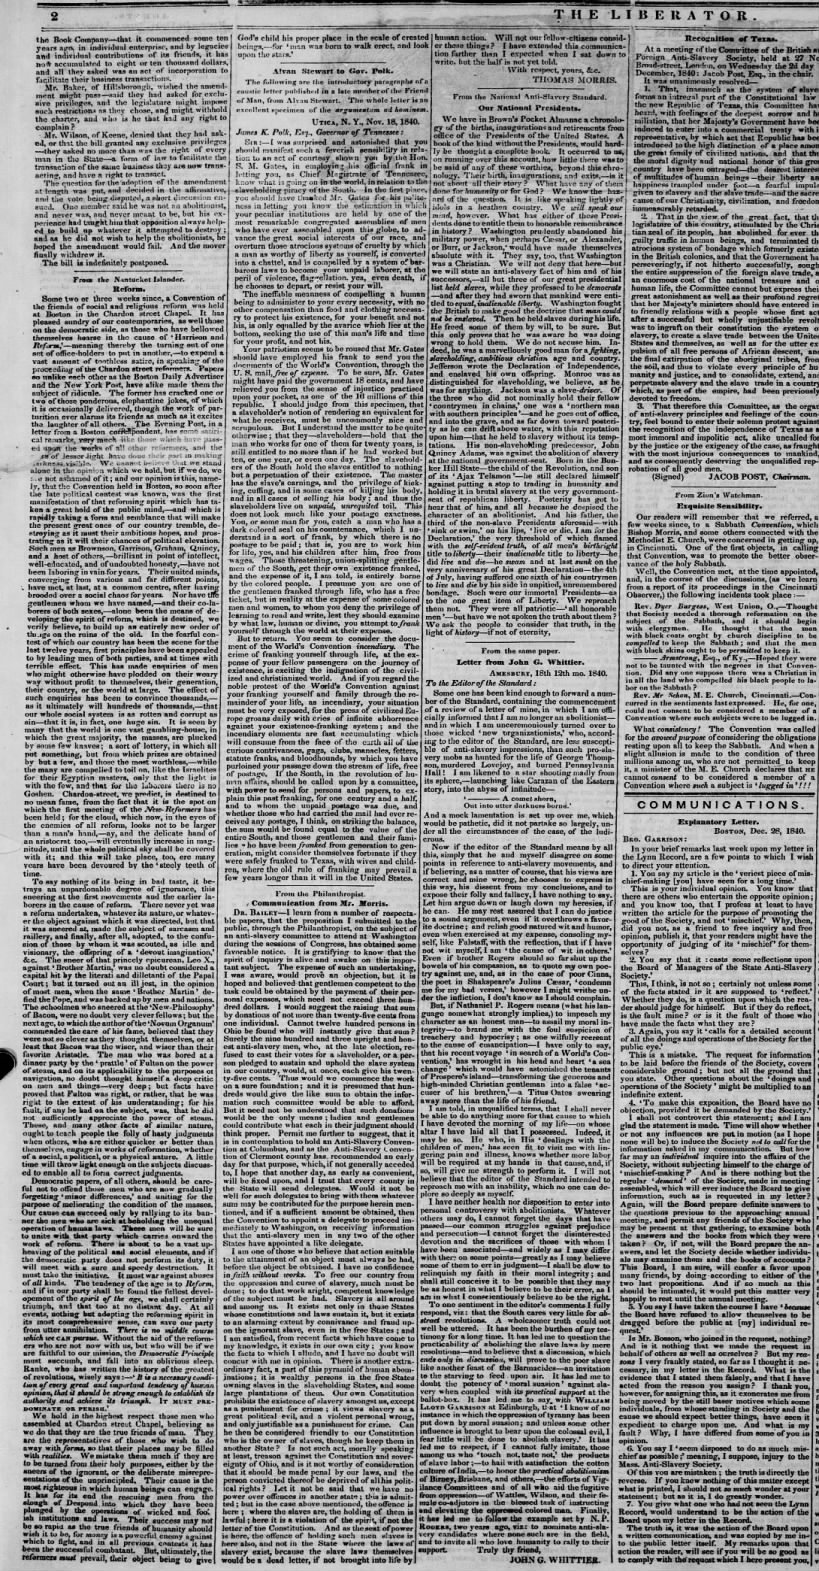 01 JAN 1841 FRI, THE LIBERATOR, PAGE 2, SECTION 1